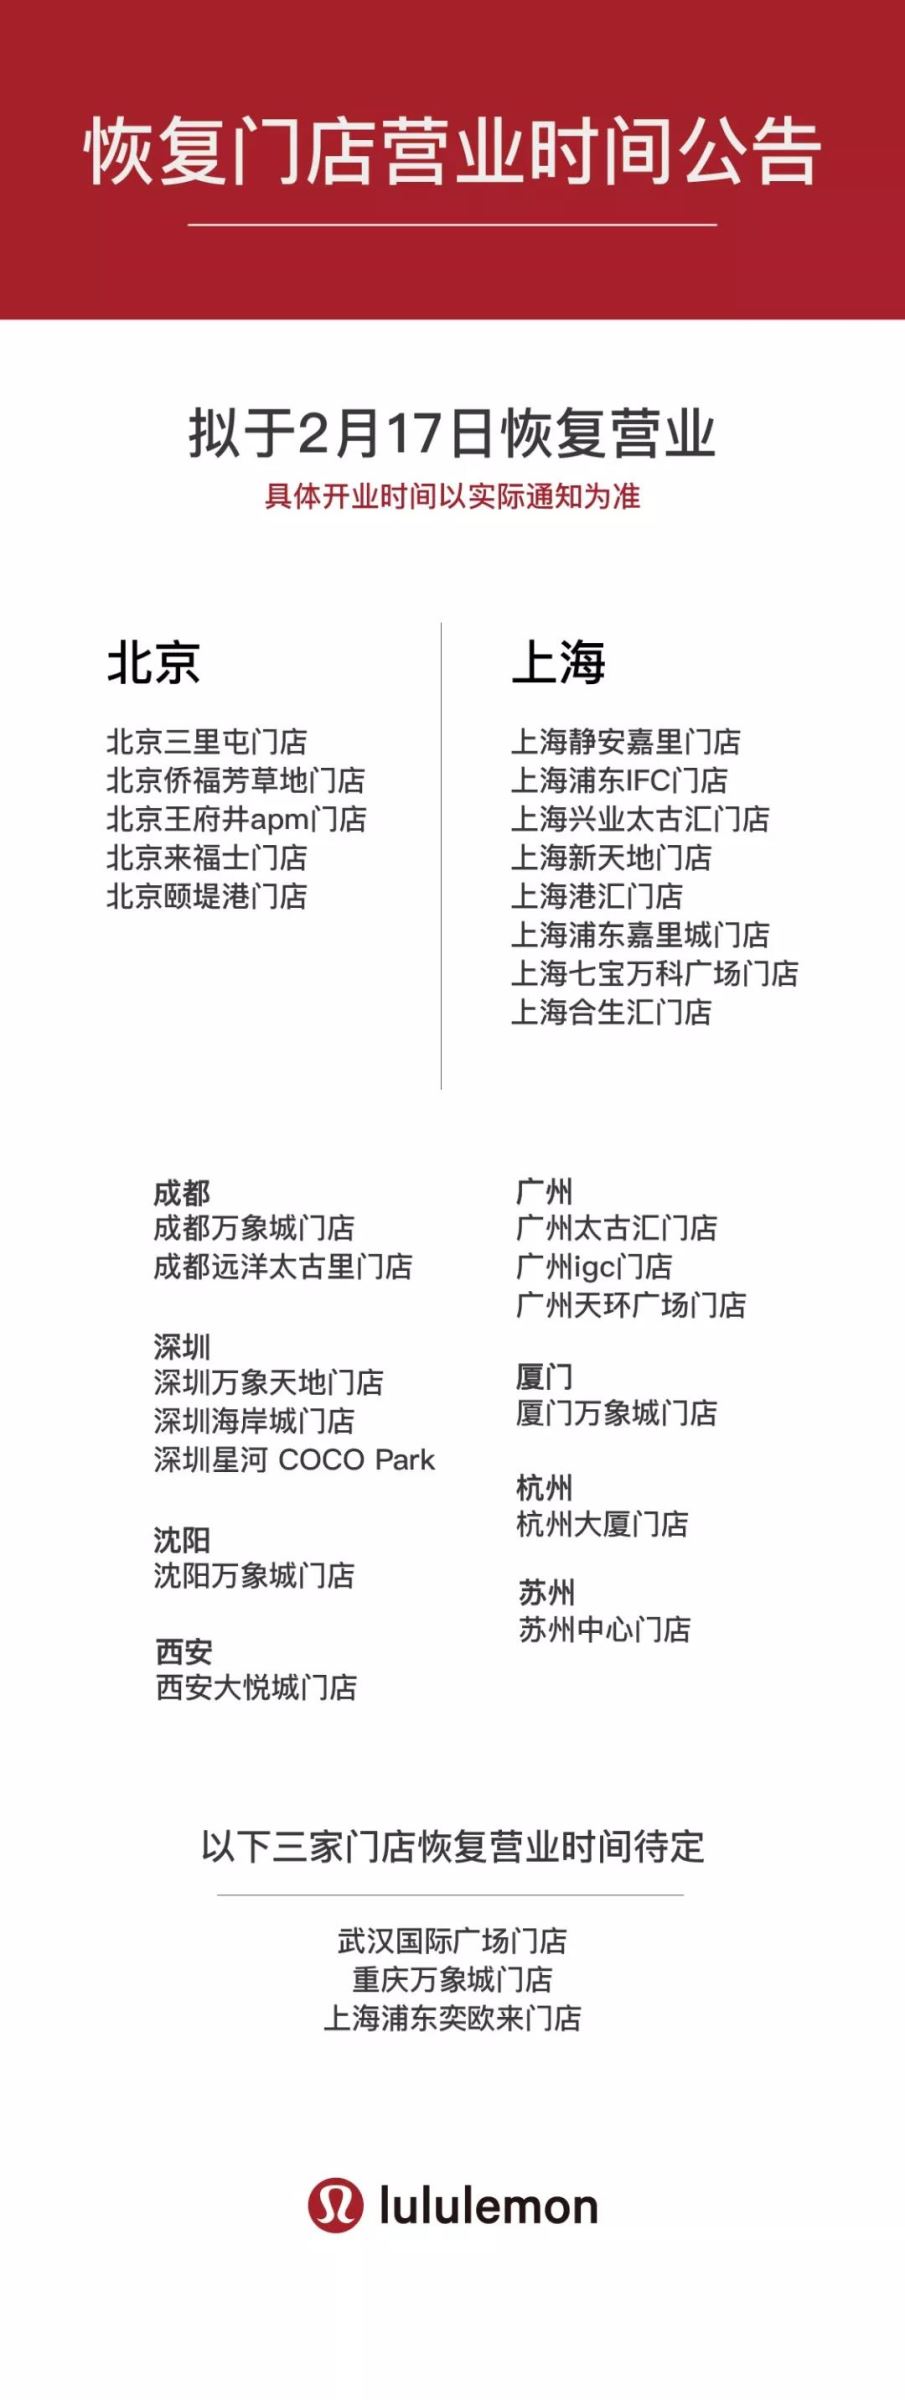 lululemon中国大陆26家门店计划于2月17日恢复营业